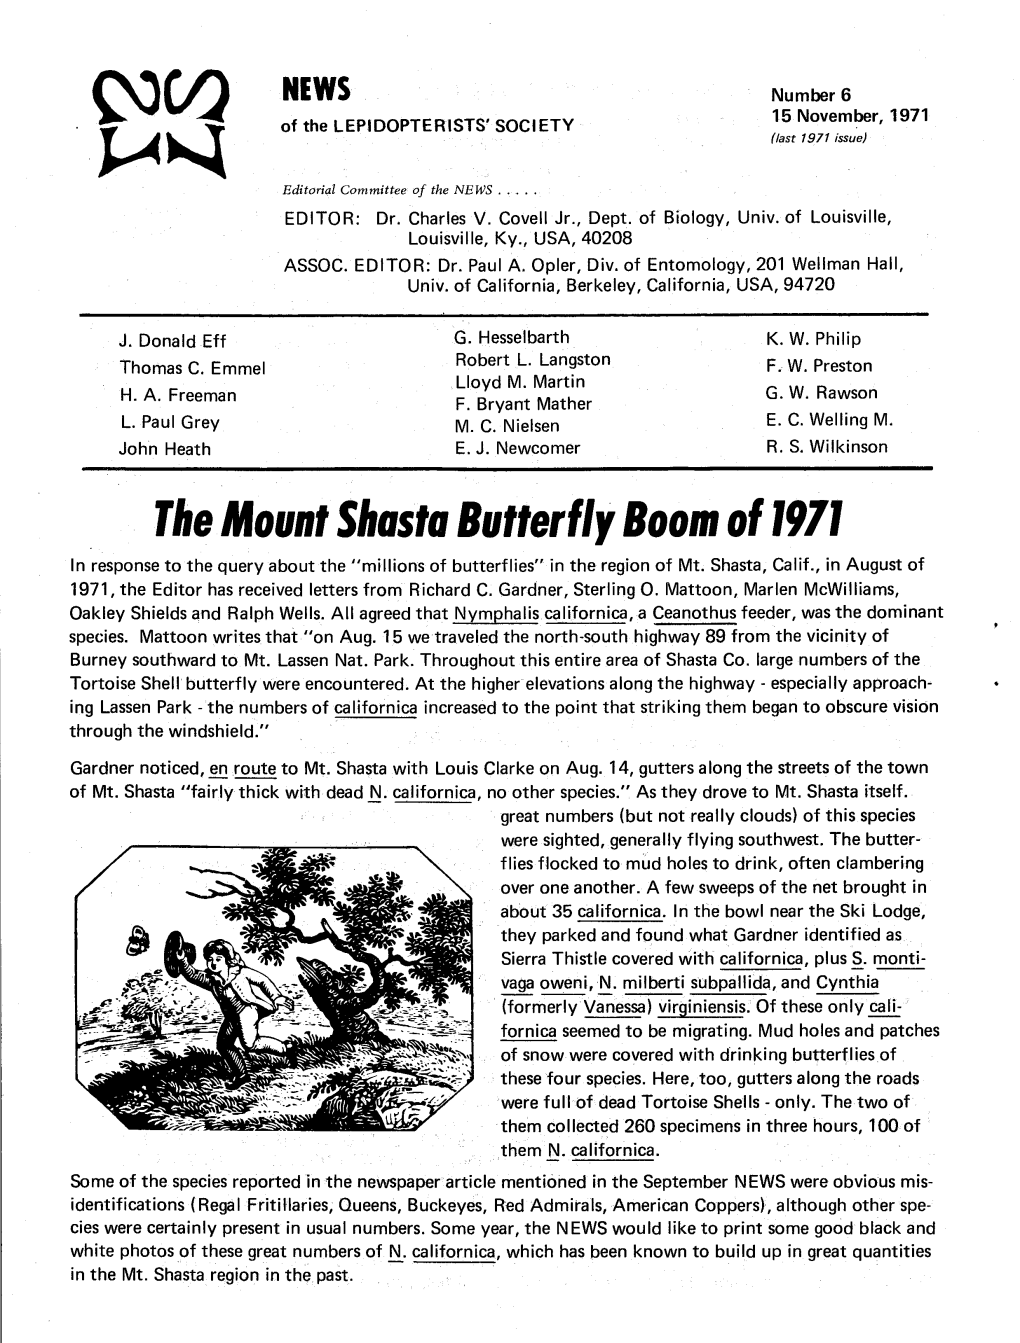 The Mount Shasta Butterf'y Boomof1911